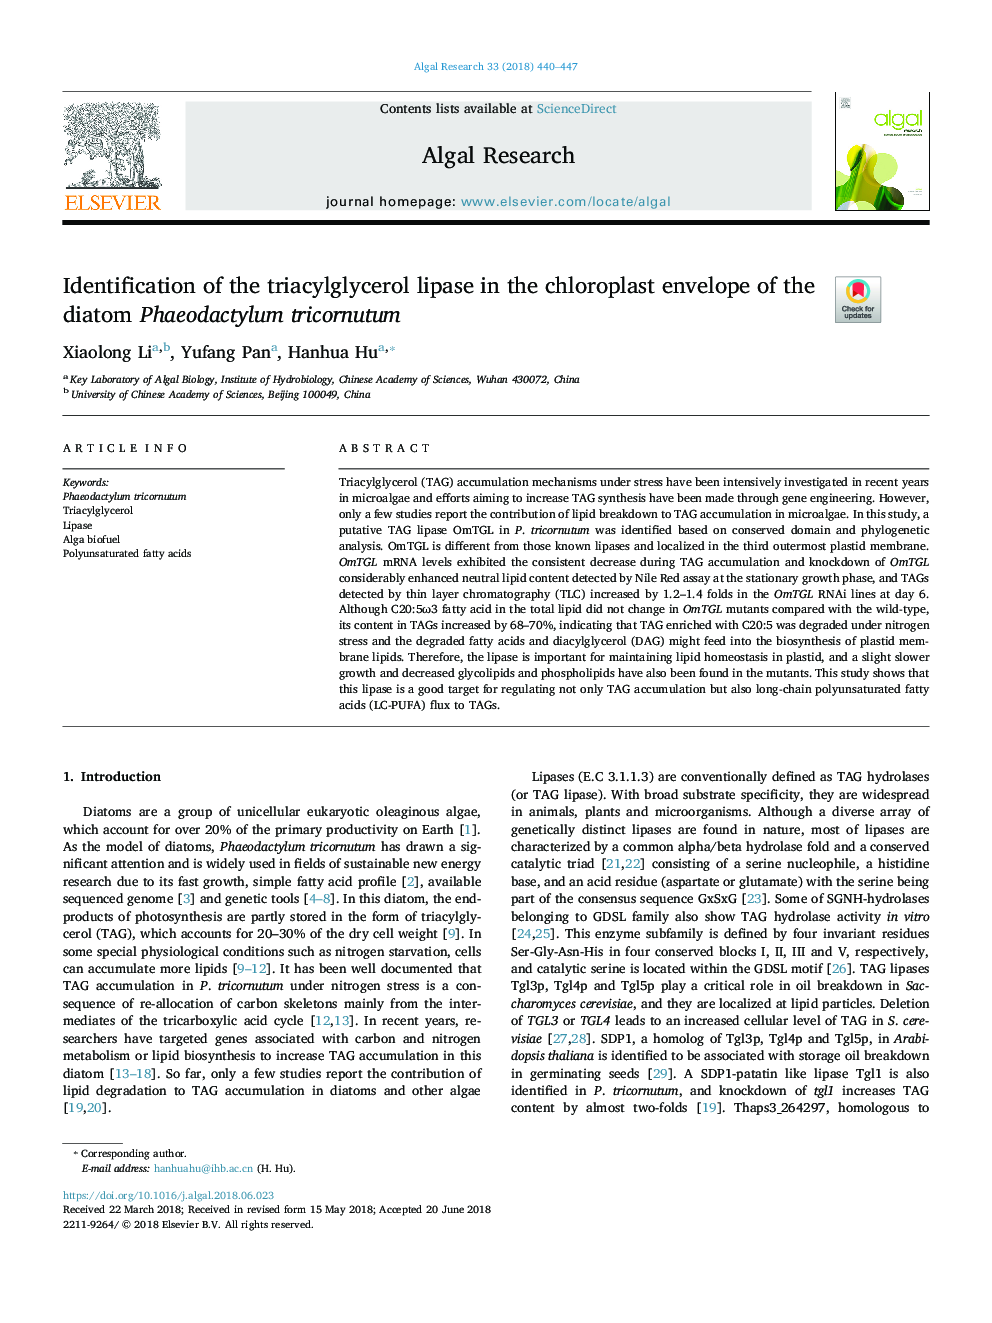 Identification of the triacylglycerol lipase in the chloroplast envelope of the diatom Phaeodactylum tricornutum